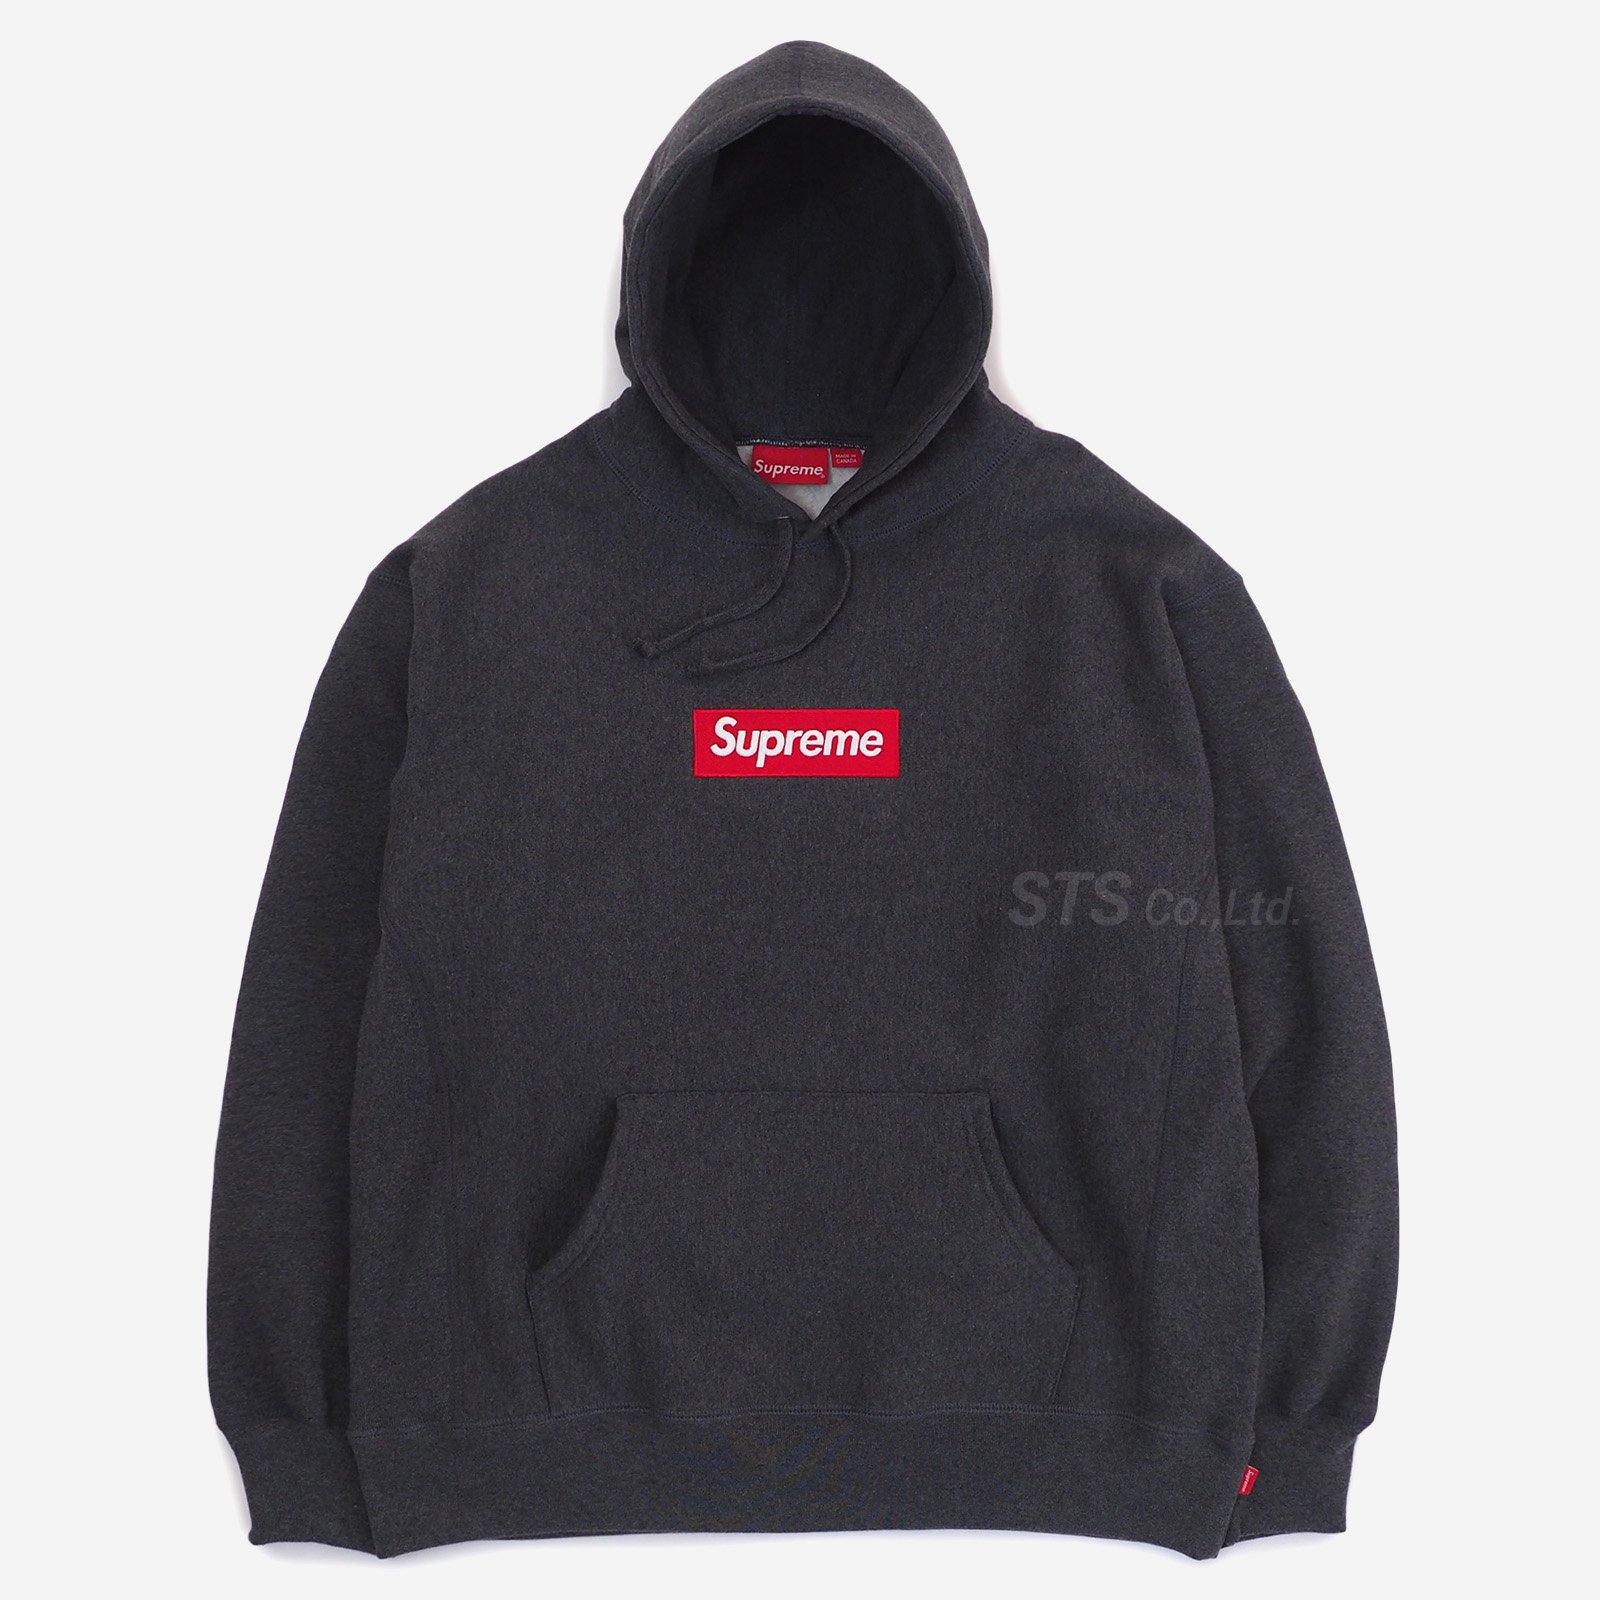 supreme box logo hoodie Dark Brown S